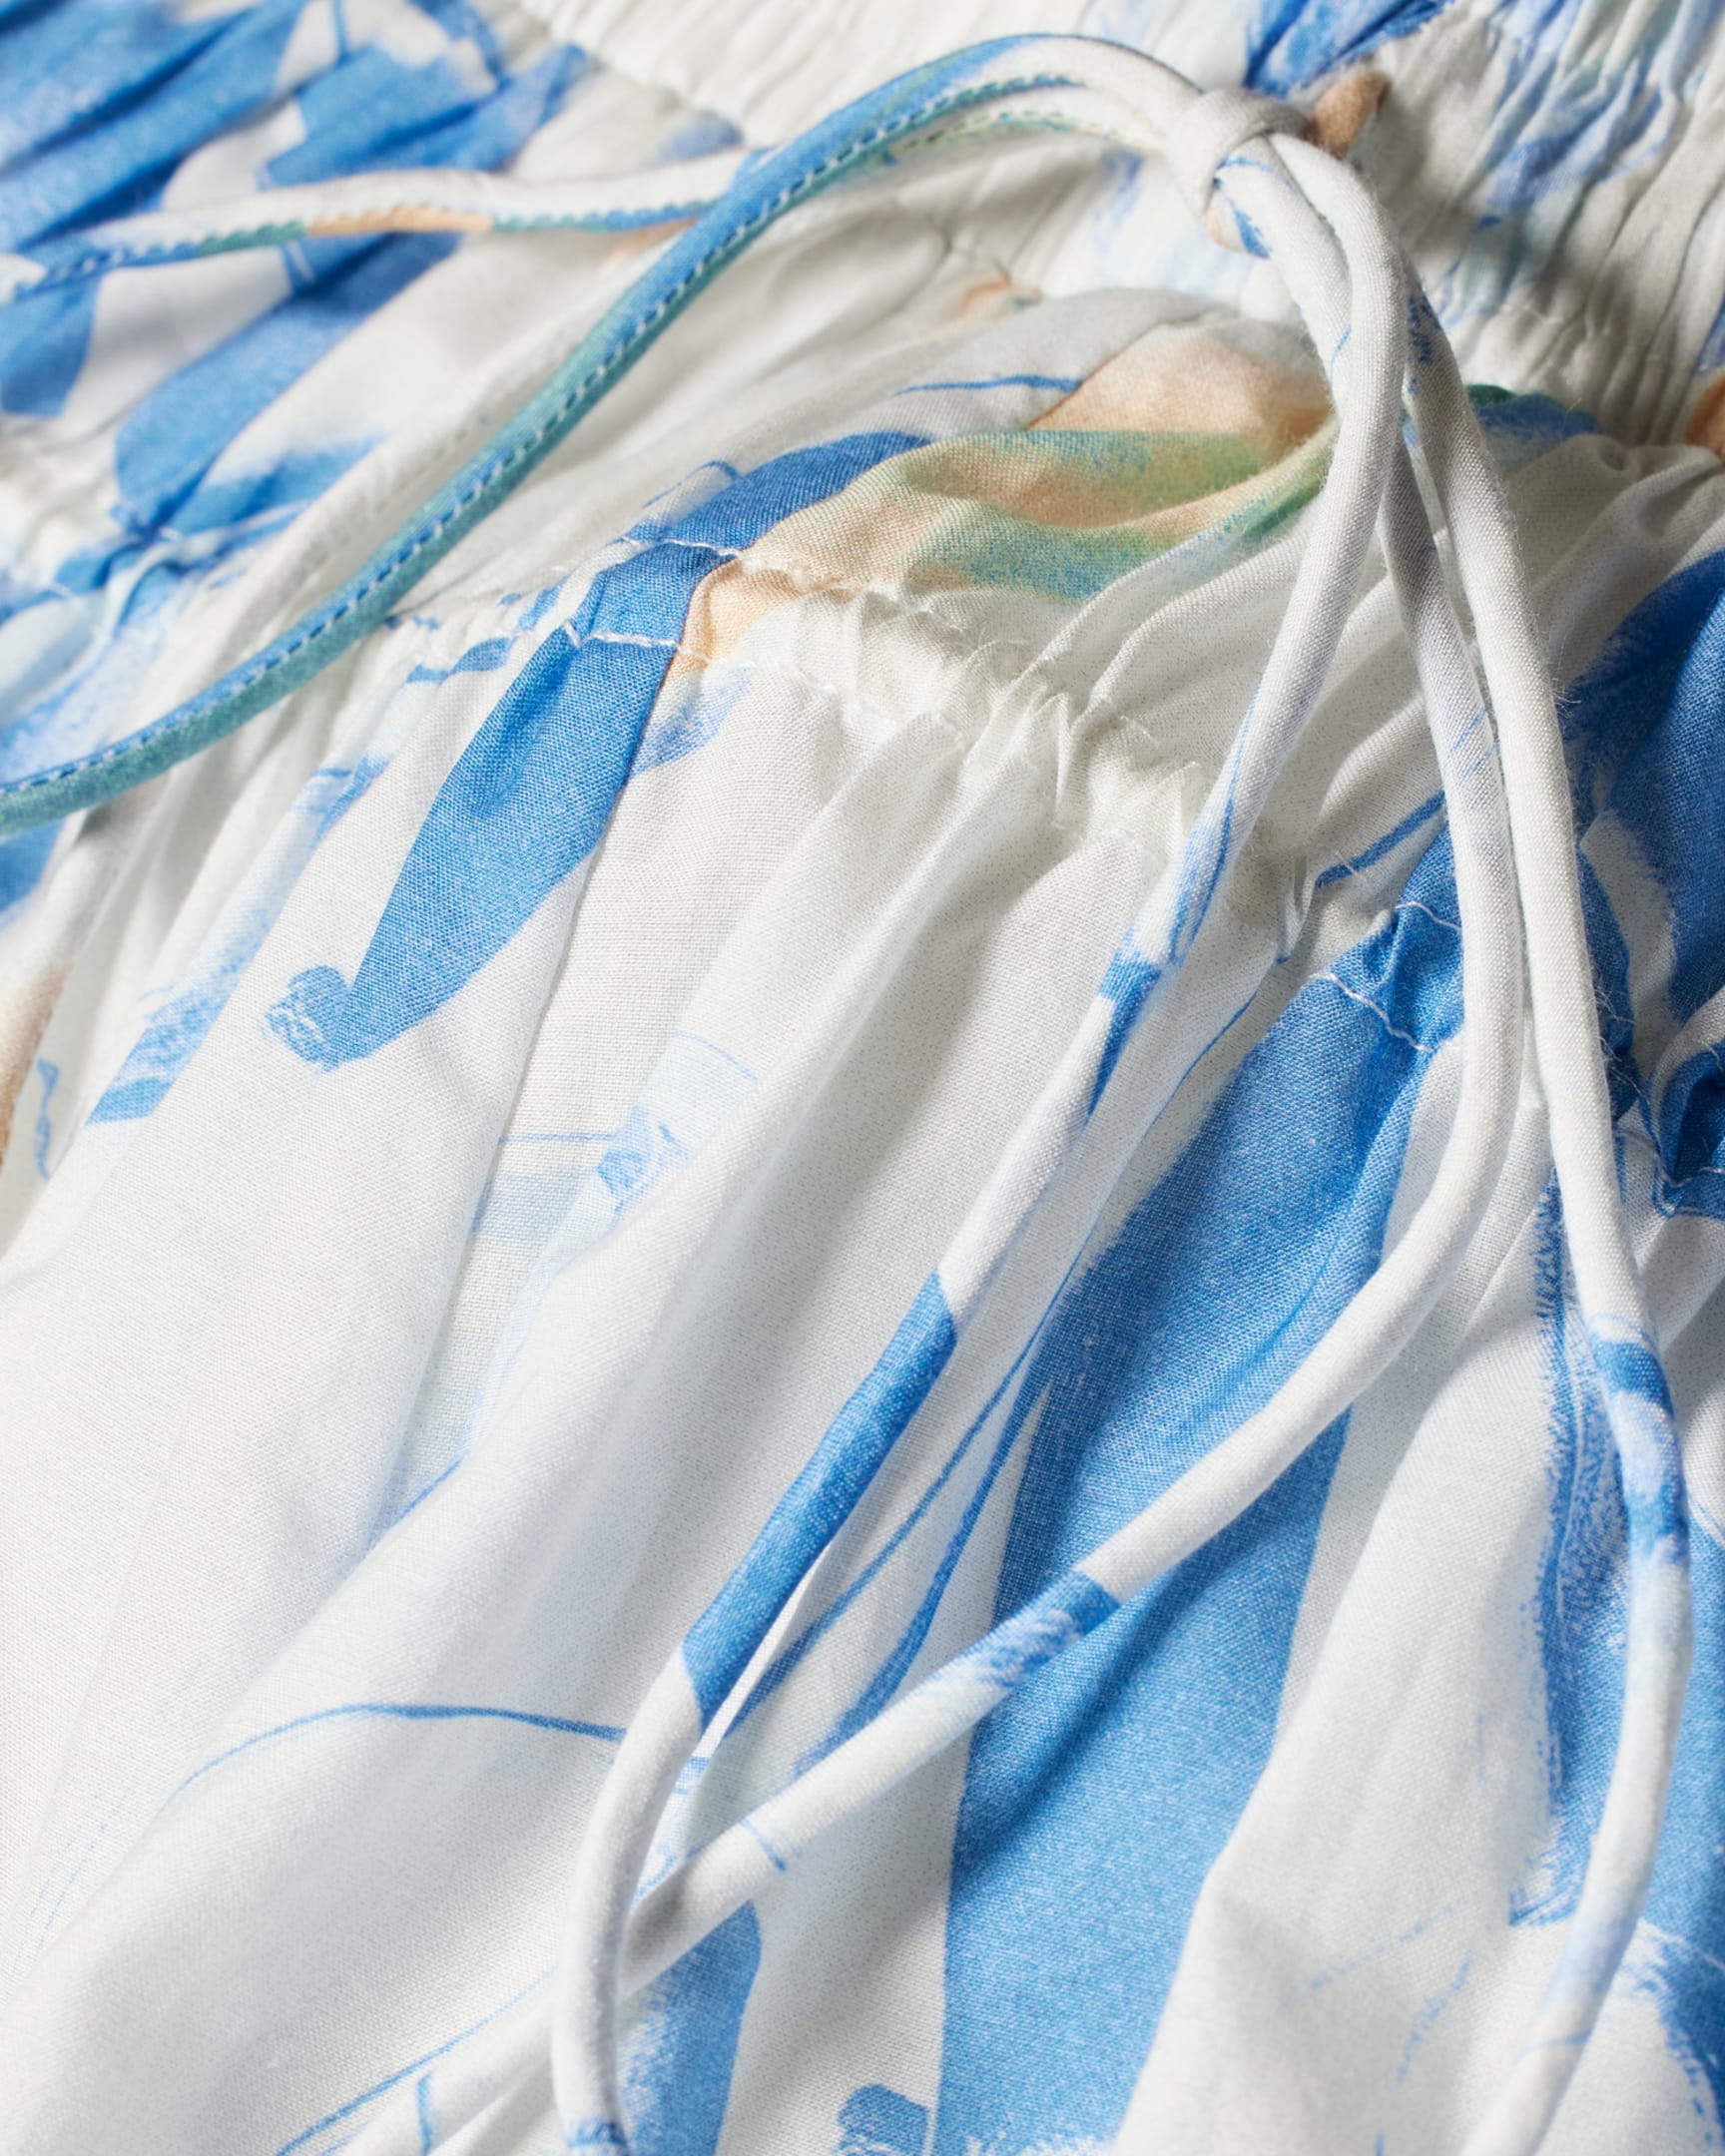 Detail View - Women's Blue 'Tulip' Cotton-Silk Blend Skirt Paul Smith